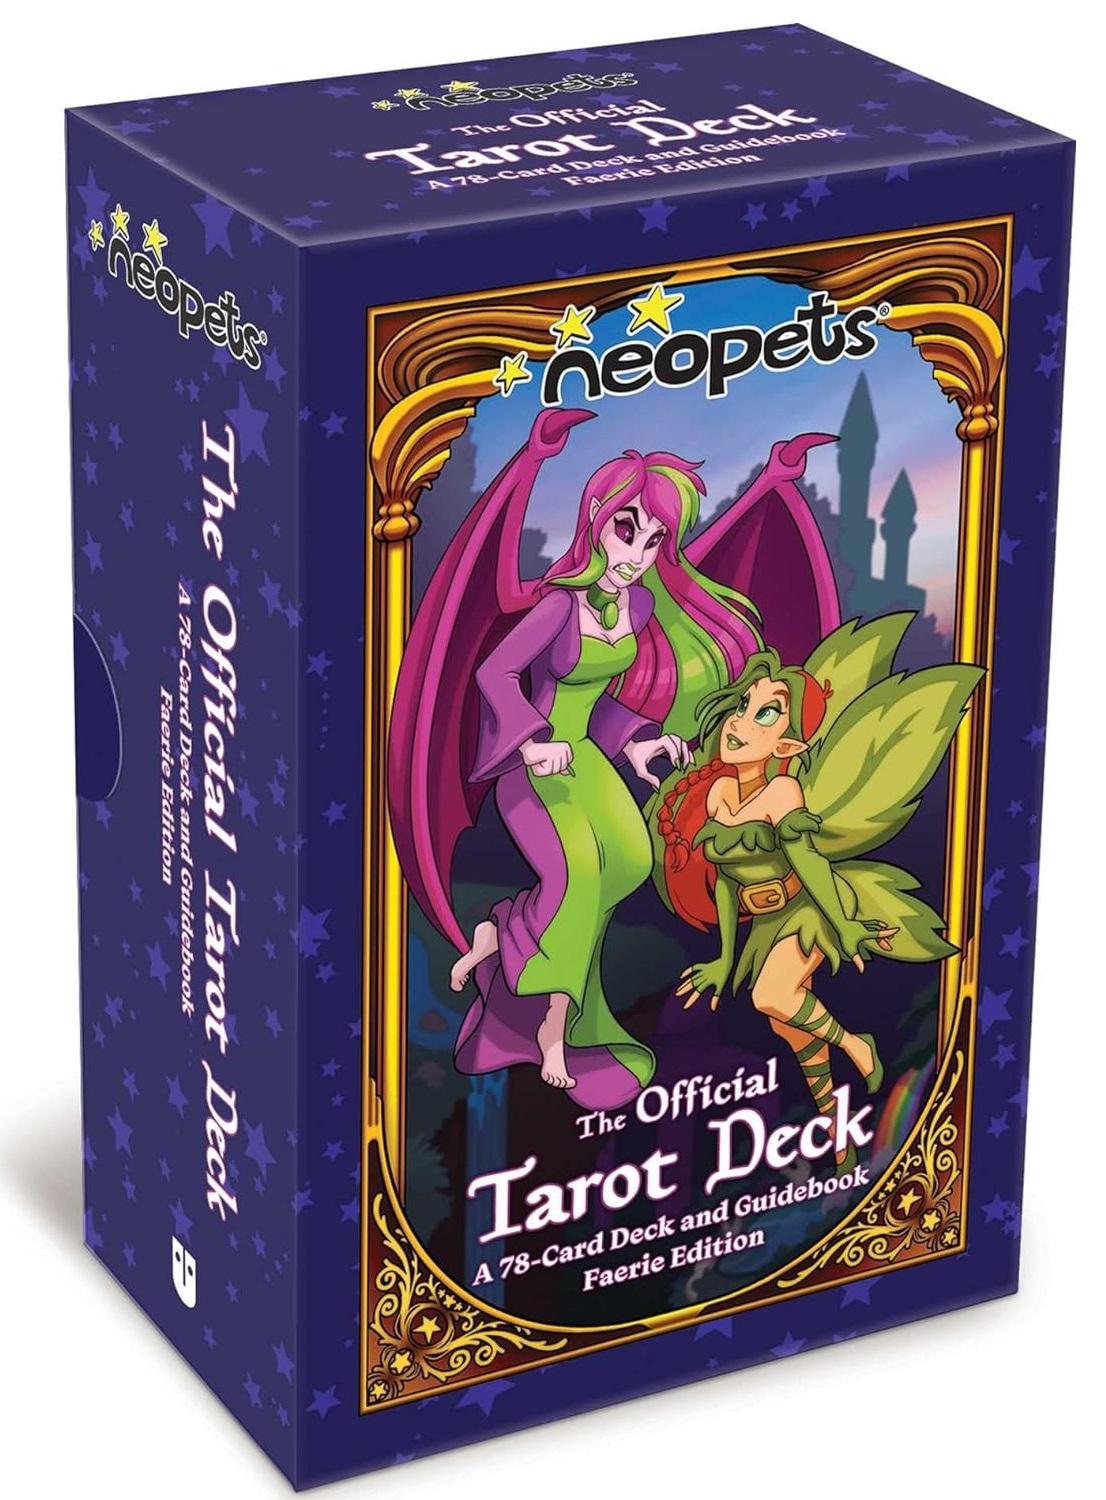 Neopets: The Official Tarot Deck